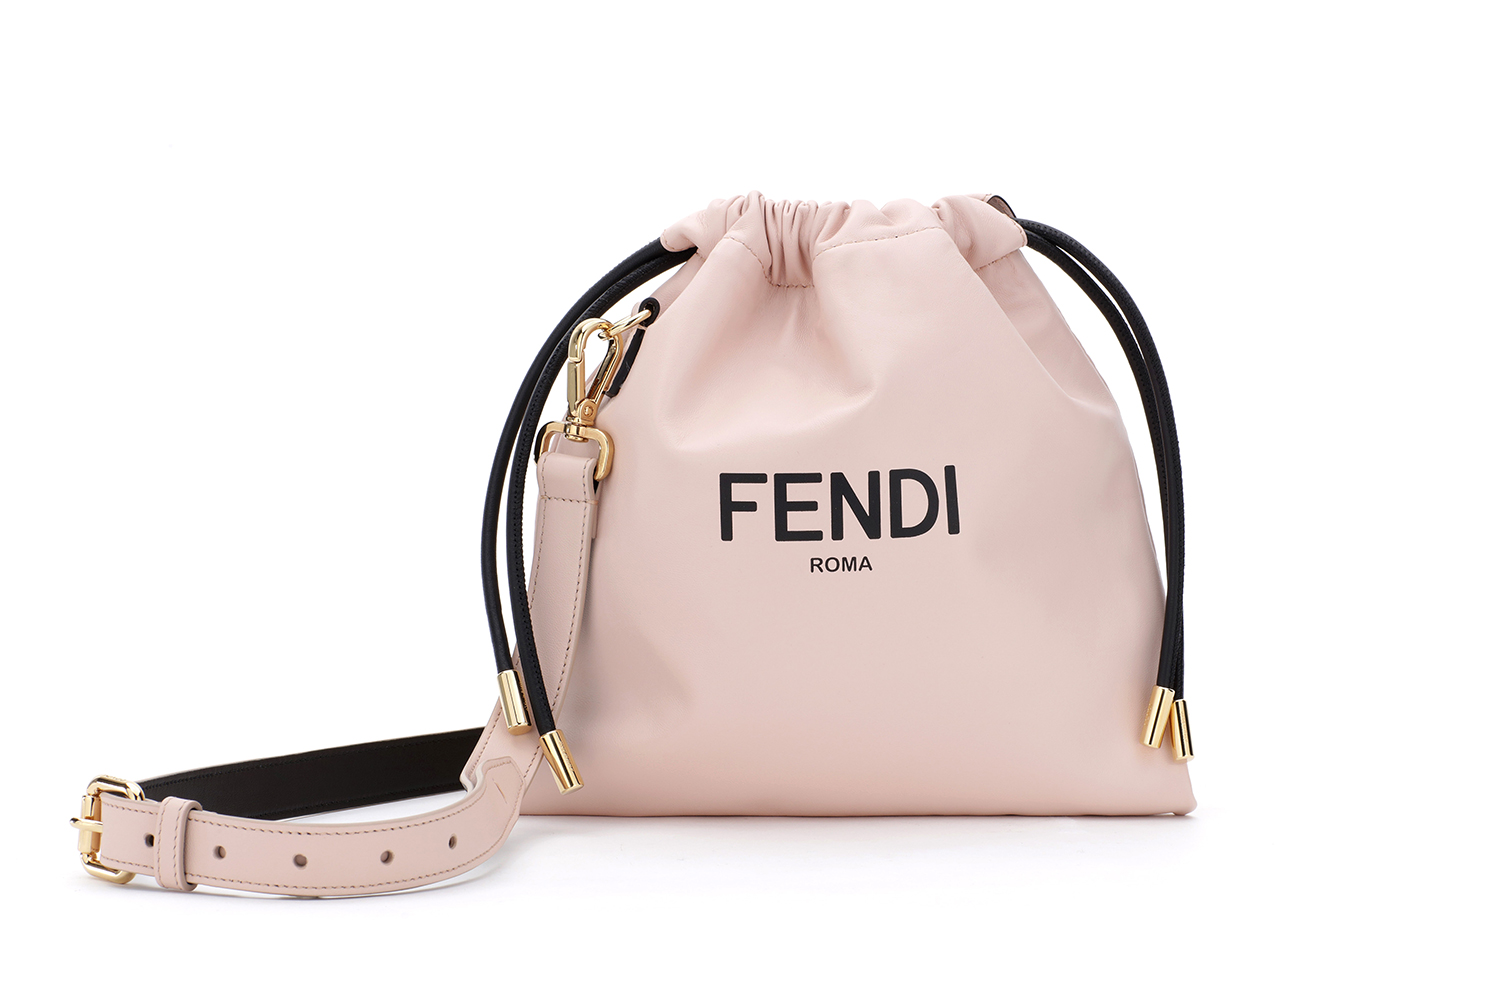 FENDIの新作アクセサリーコレクション『FENDI PACK』